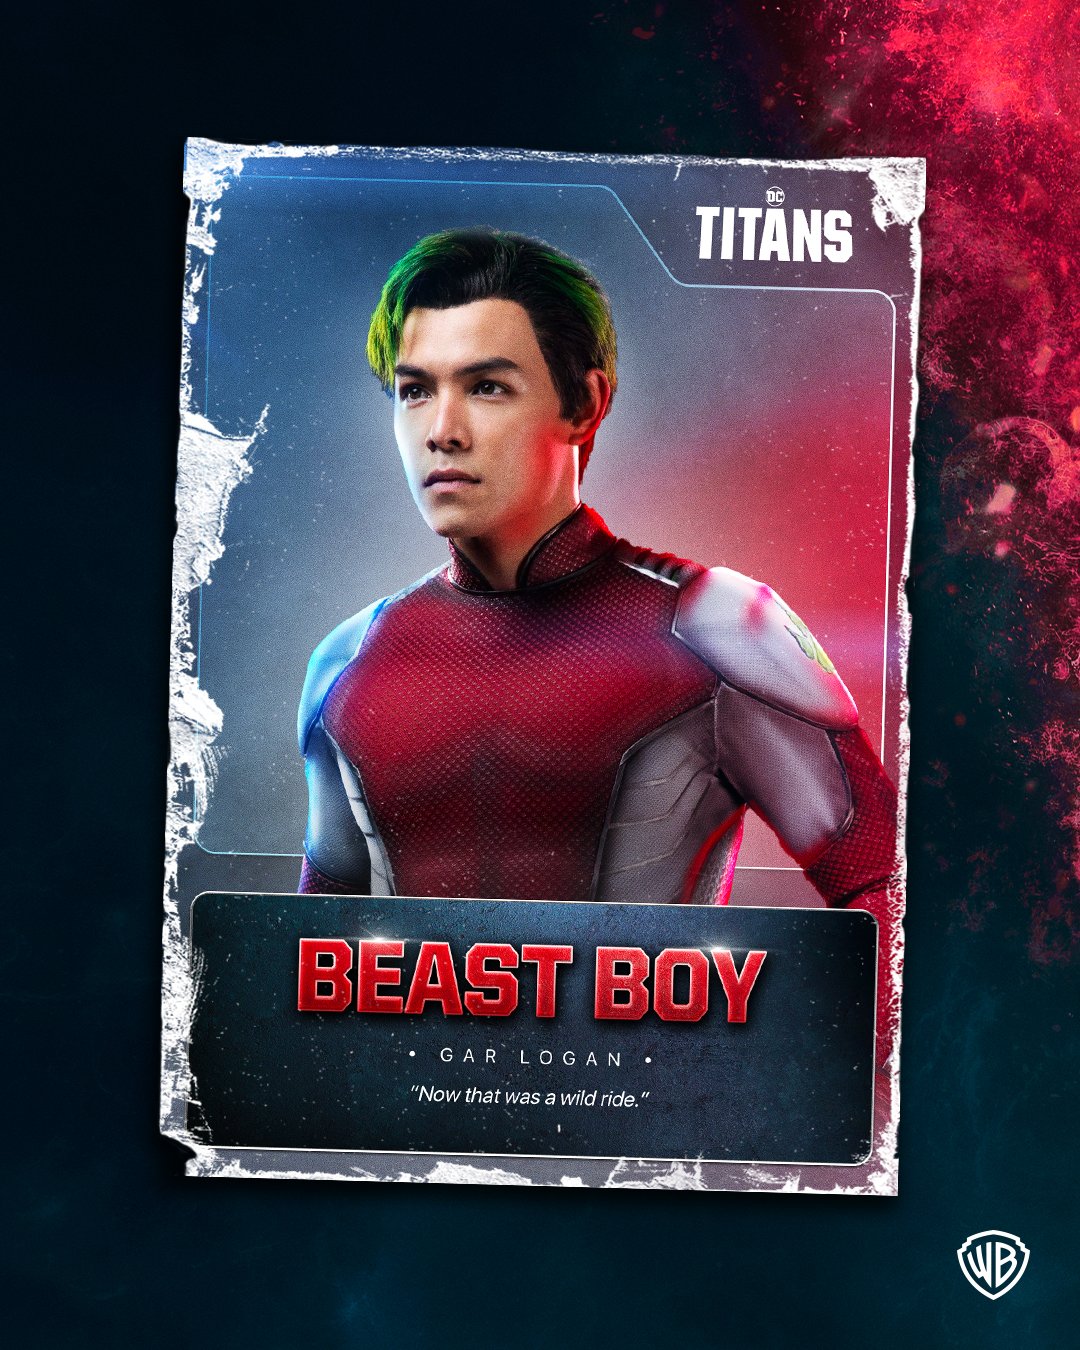 DC Titans on X: now THAT'S a transformation 😱 #dctitans https